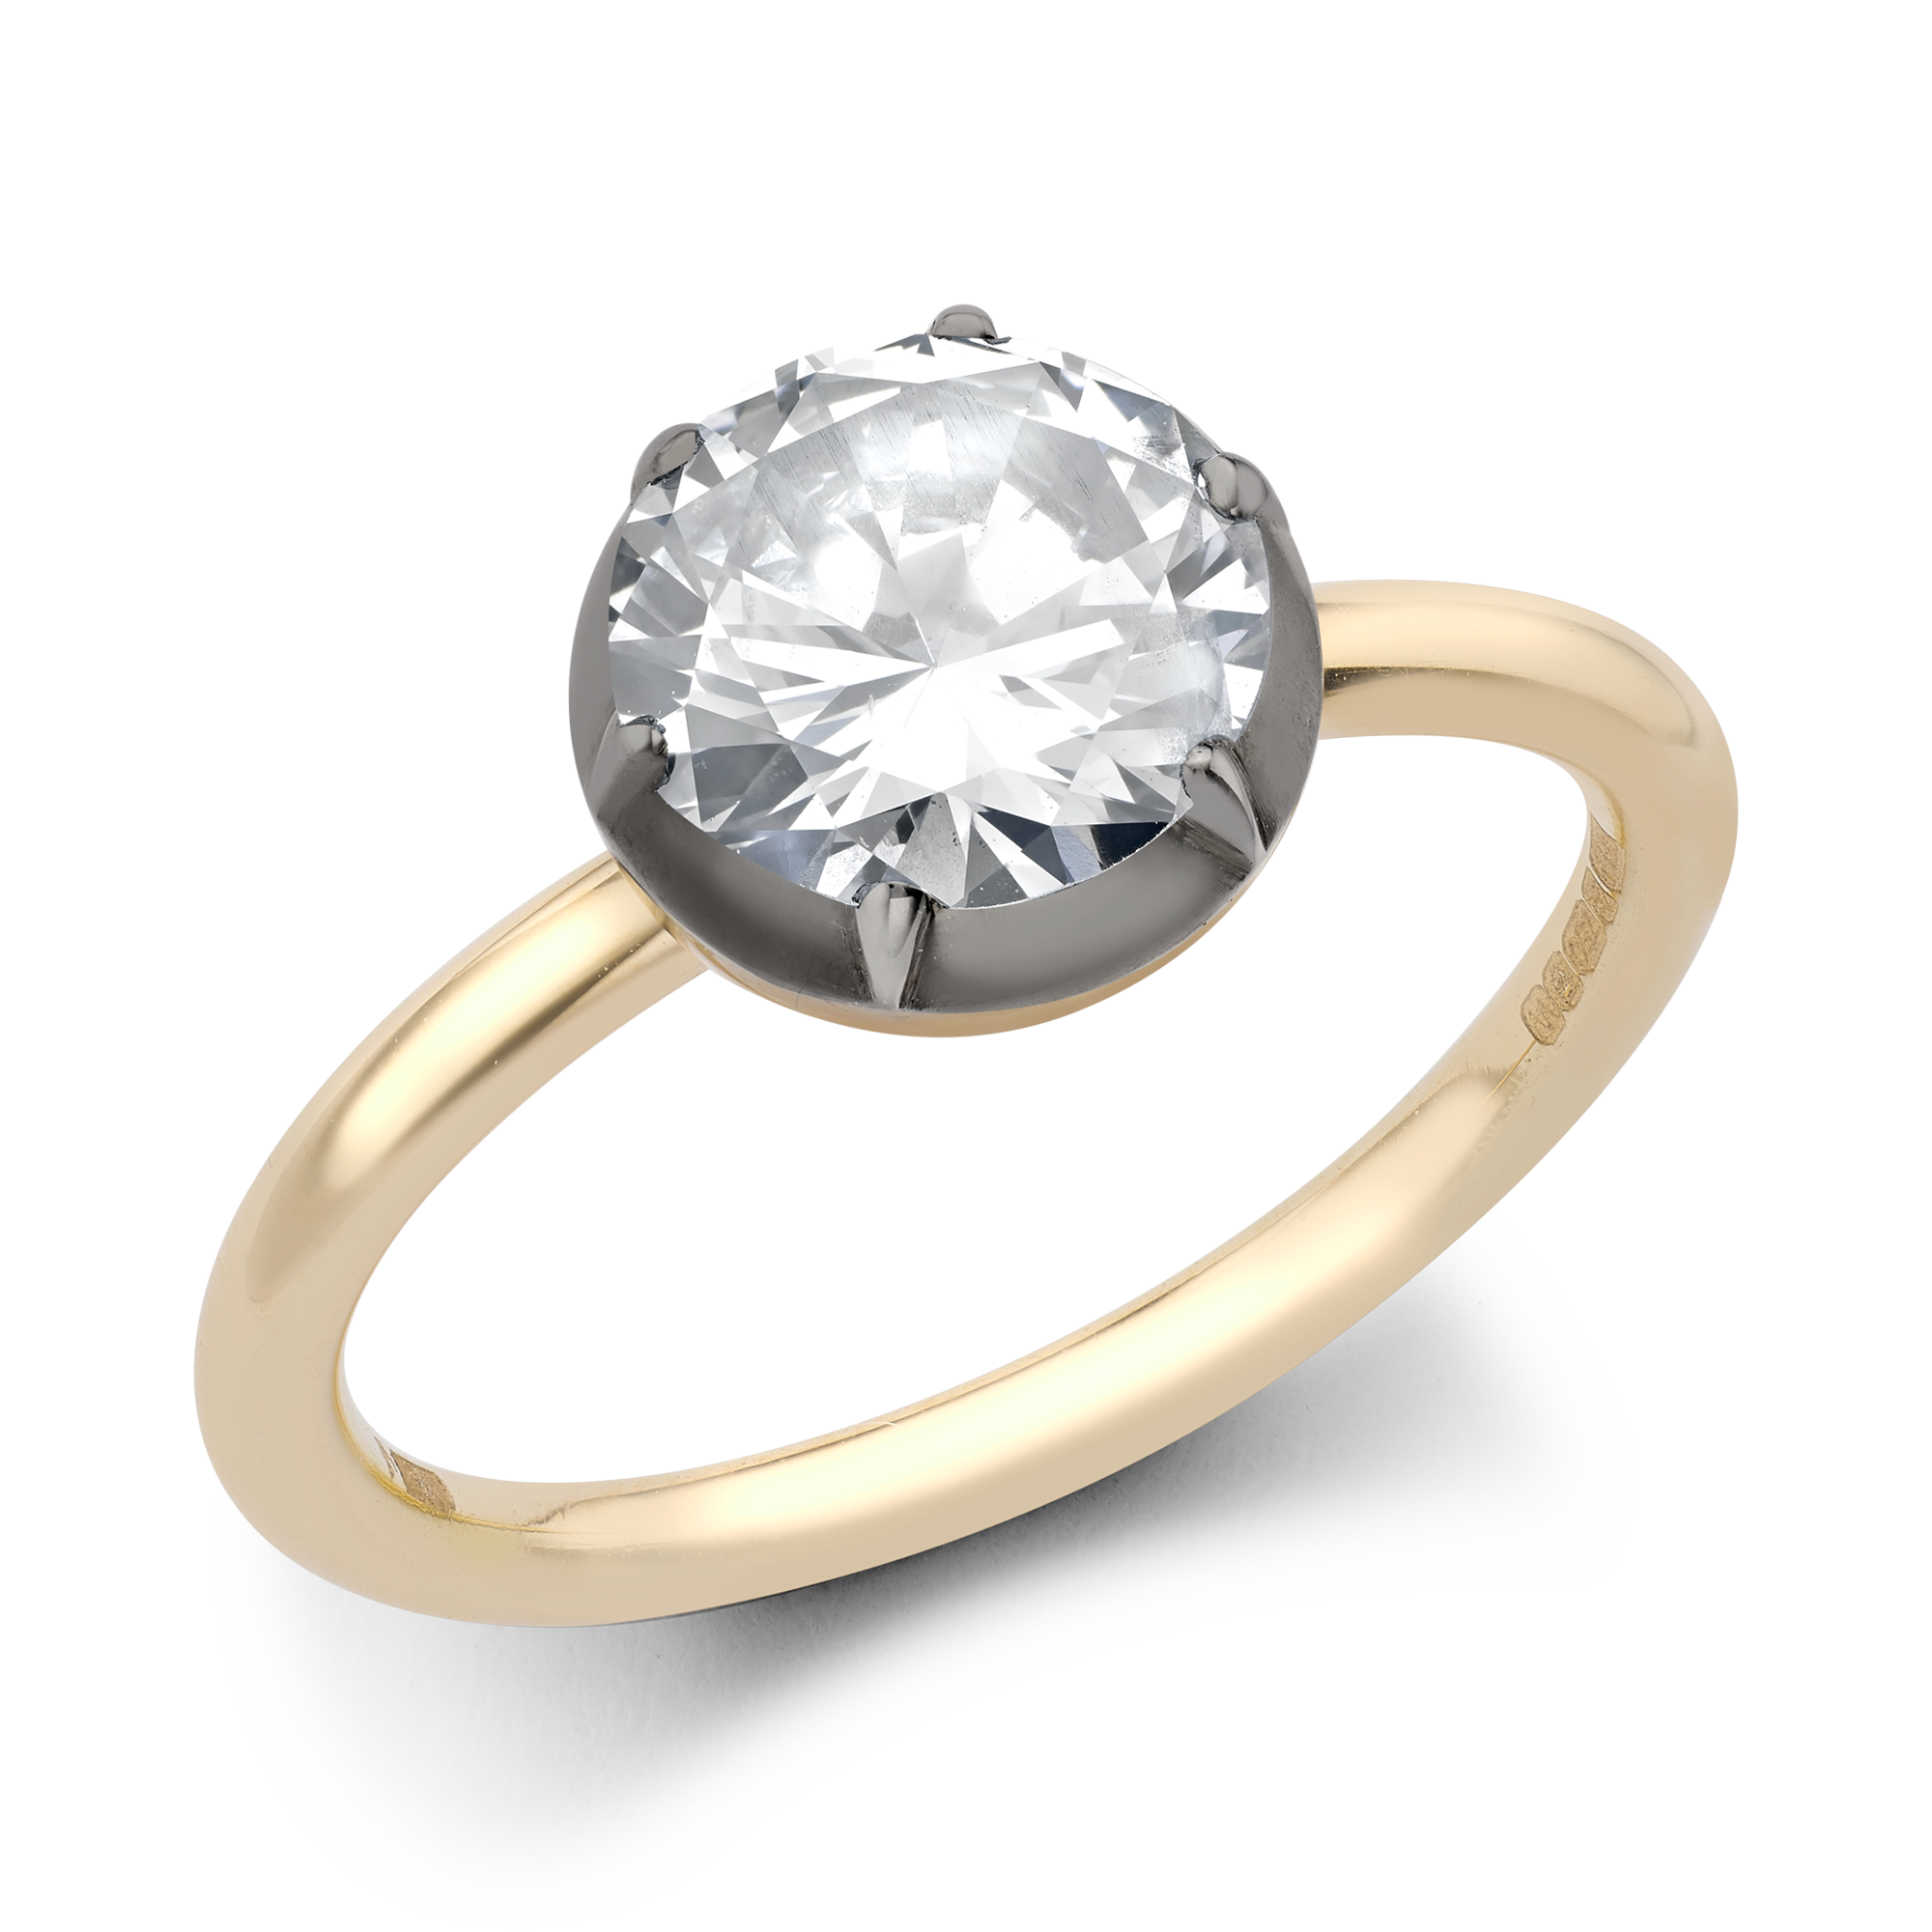 Georgian Setting 1.63ct Diamond Solitaire Ring Brilliant cut, Claw set_1